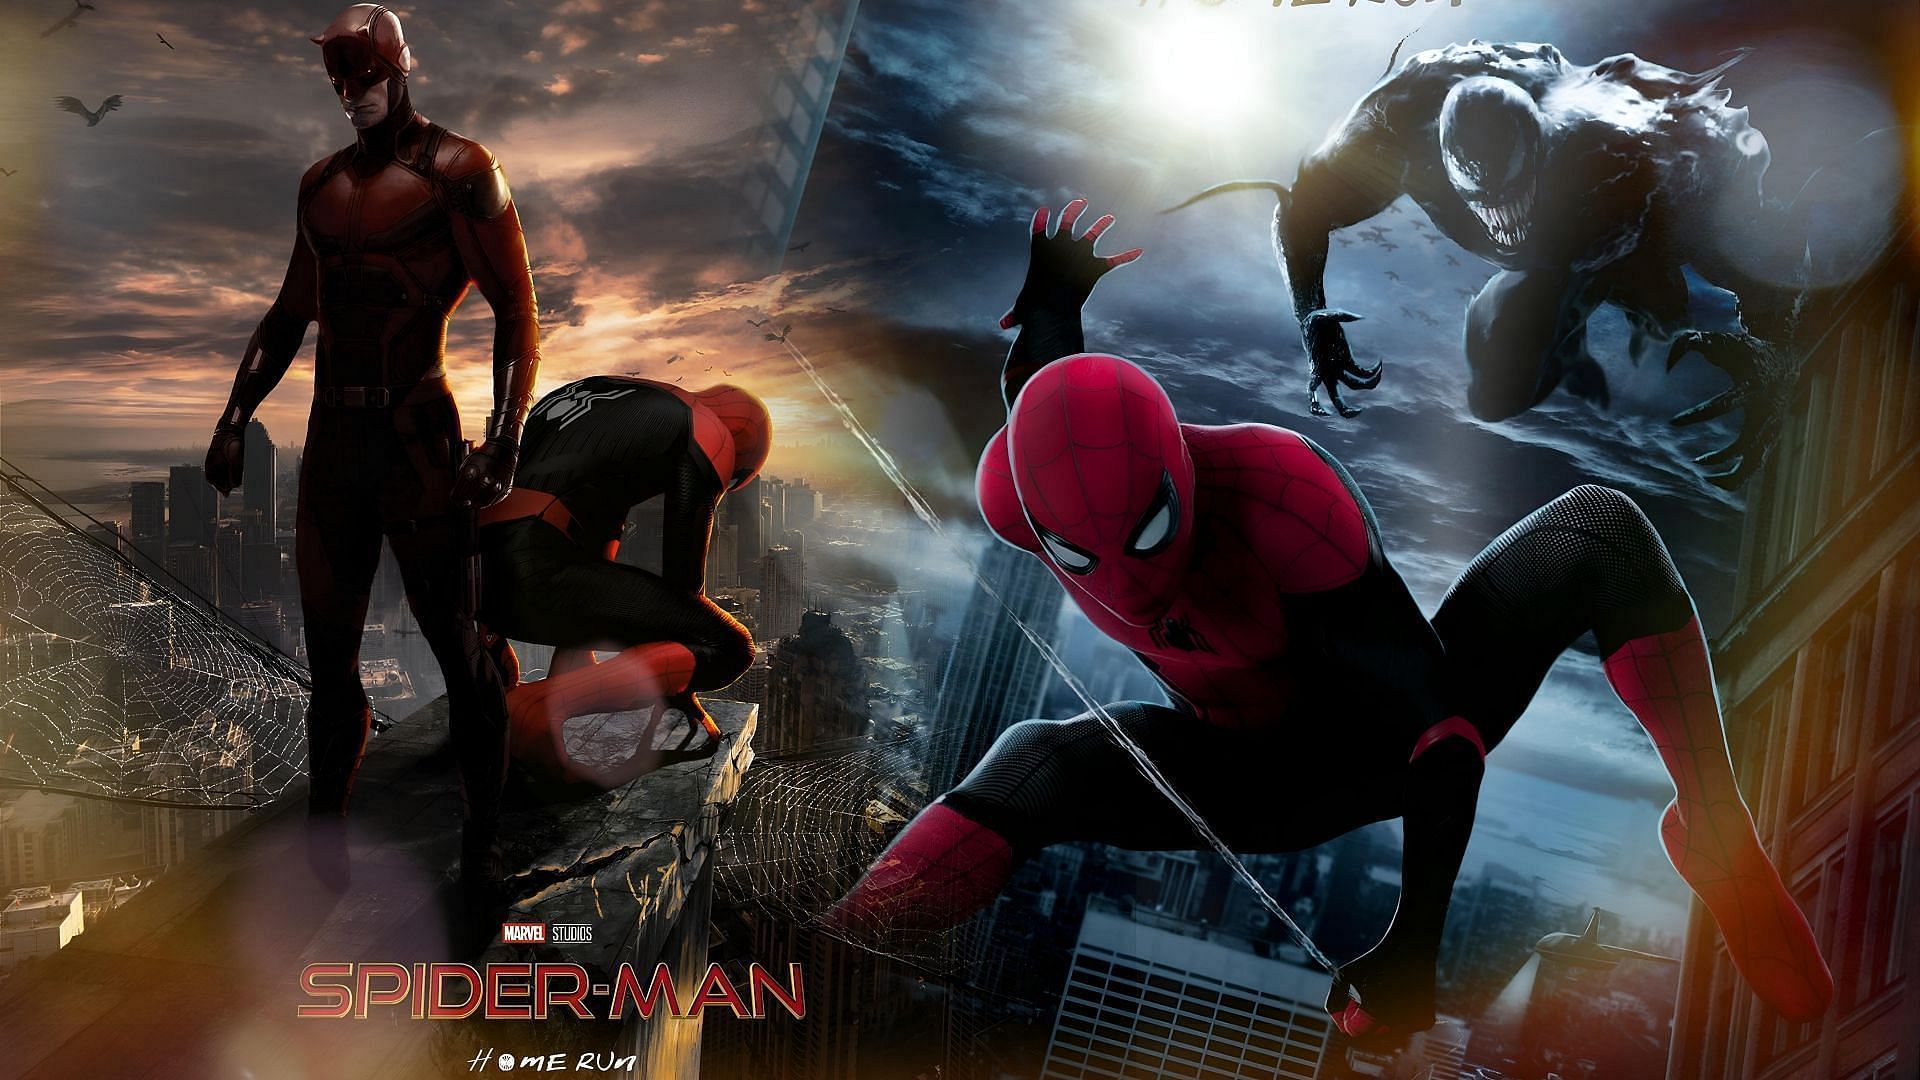 Spider-man 4 is finally set to hit theaters (Image Via Sportskeeda)